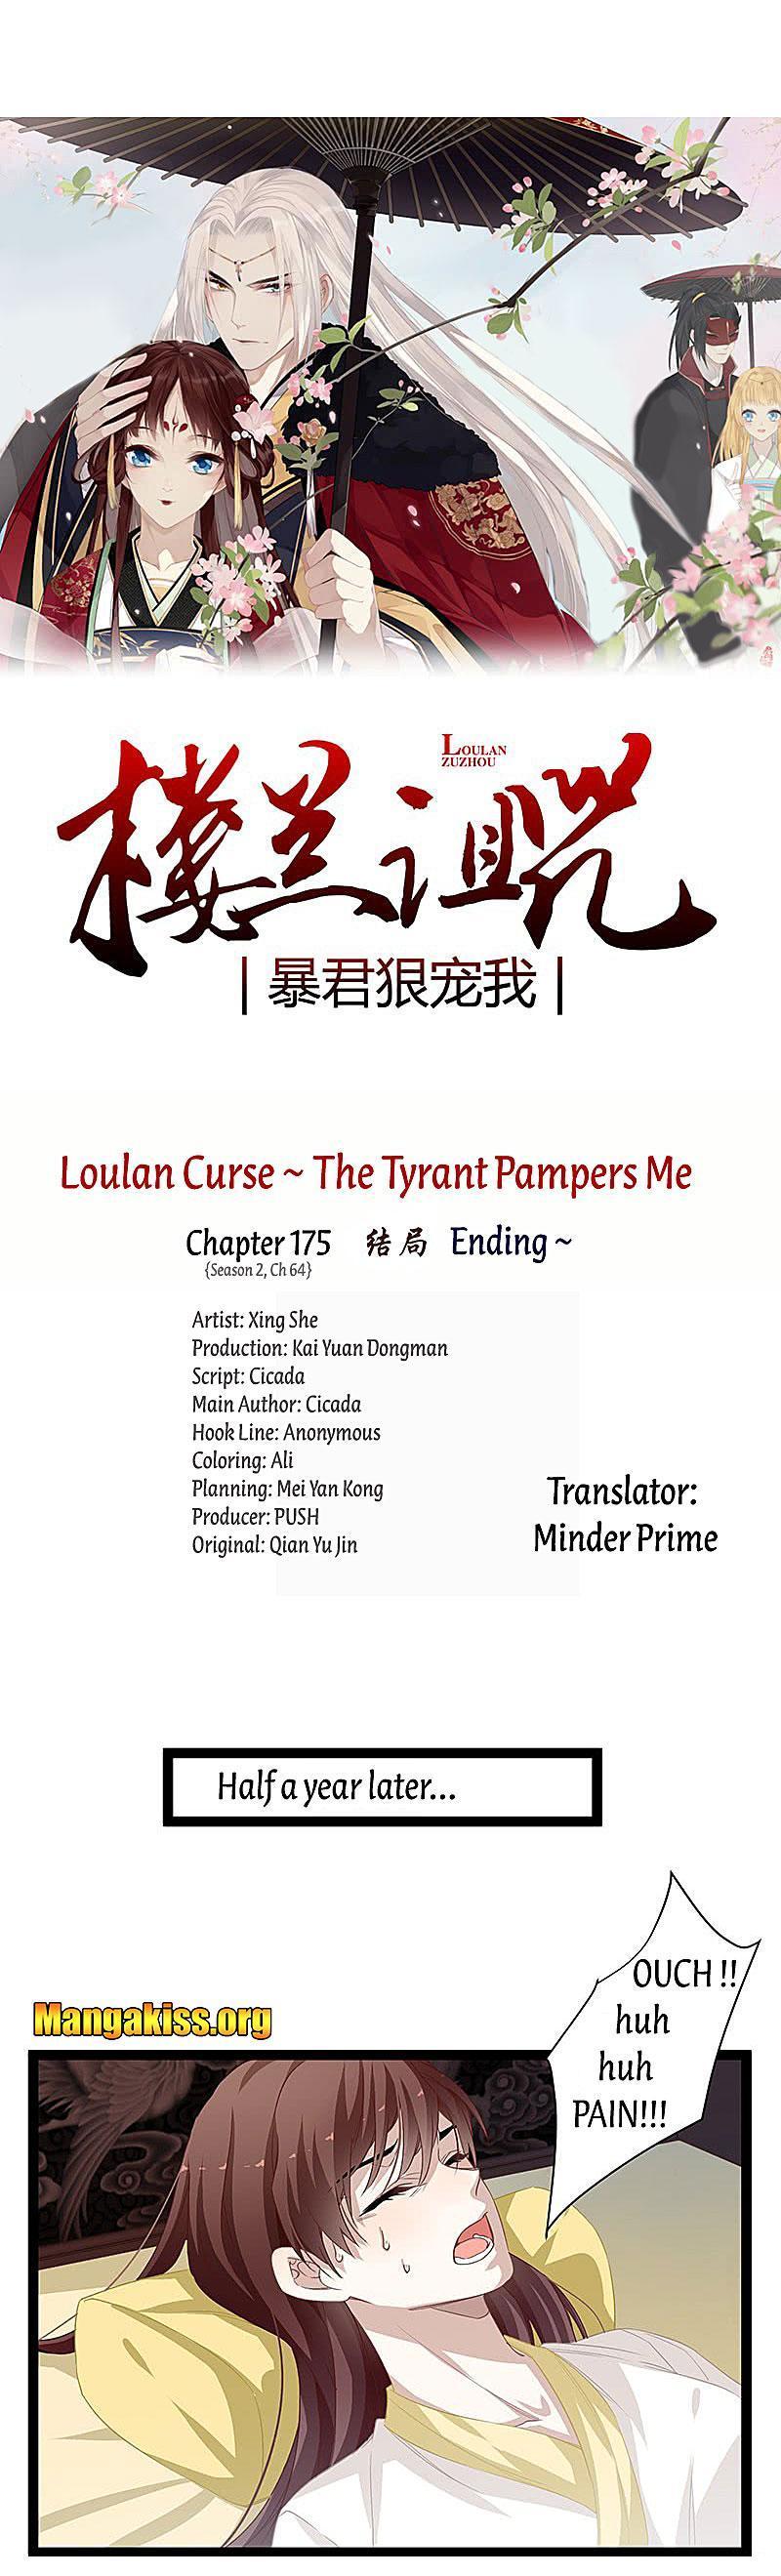 loulan curse tyrant pampered me chapter 1 manga